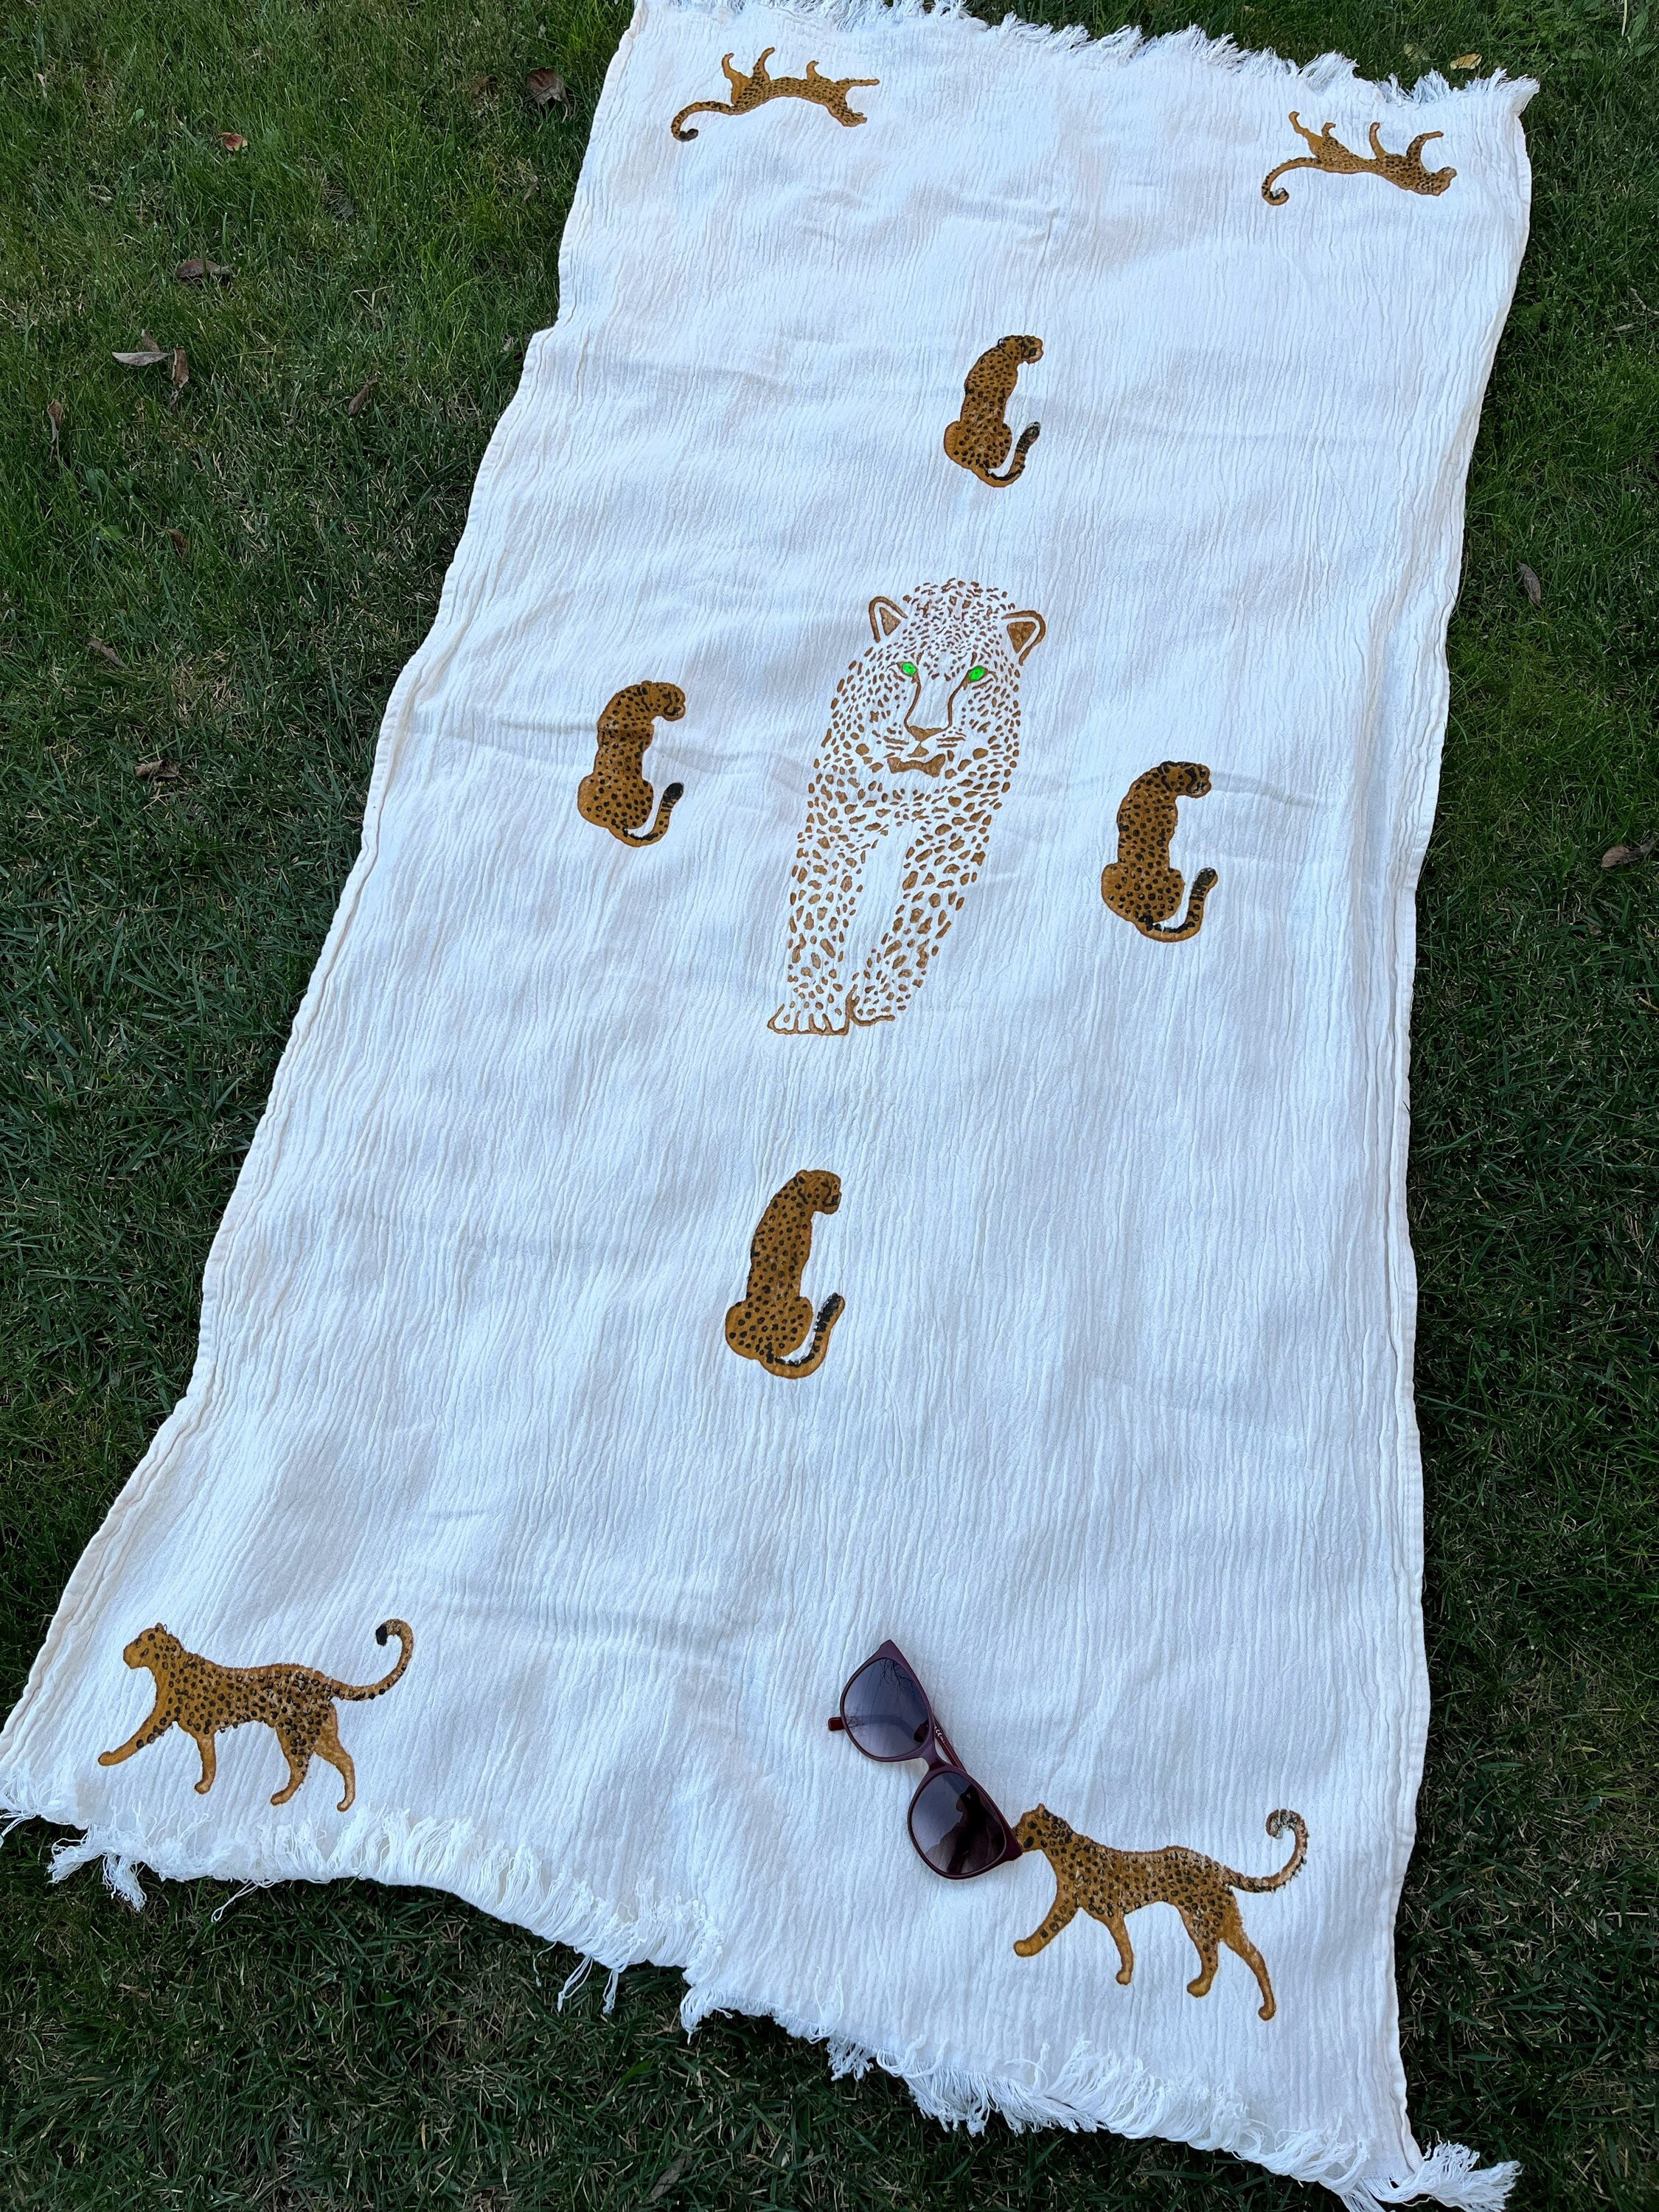 COTTON CRAFT Hand Towels - Set of 4 Animal Print Cheetah Leopard Africa  Safari Decorative Hand Towel…See more COTTON CRAFT Hand Towels - Set of 4